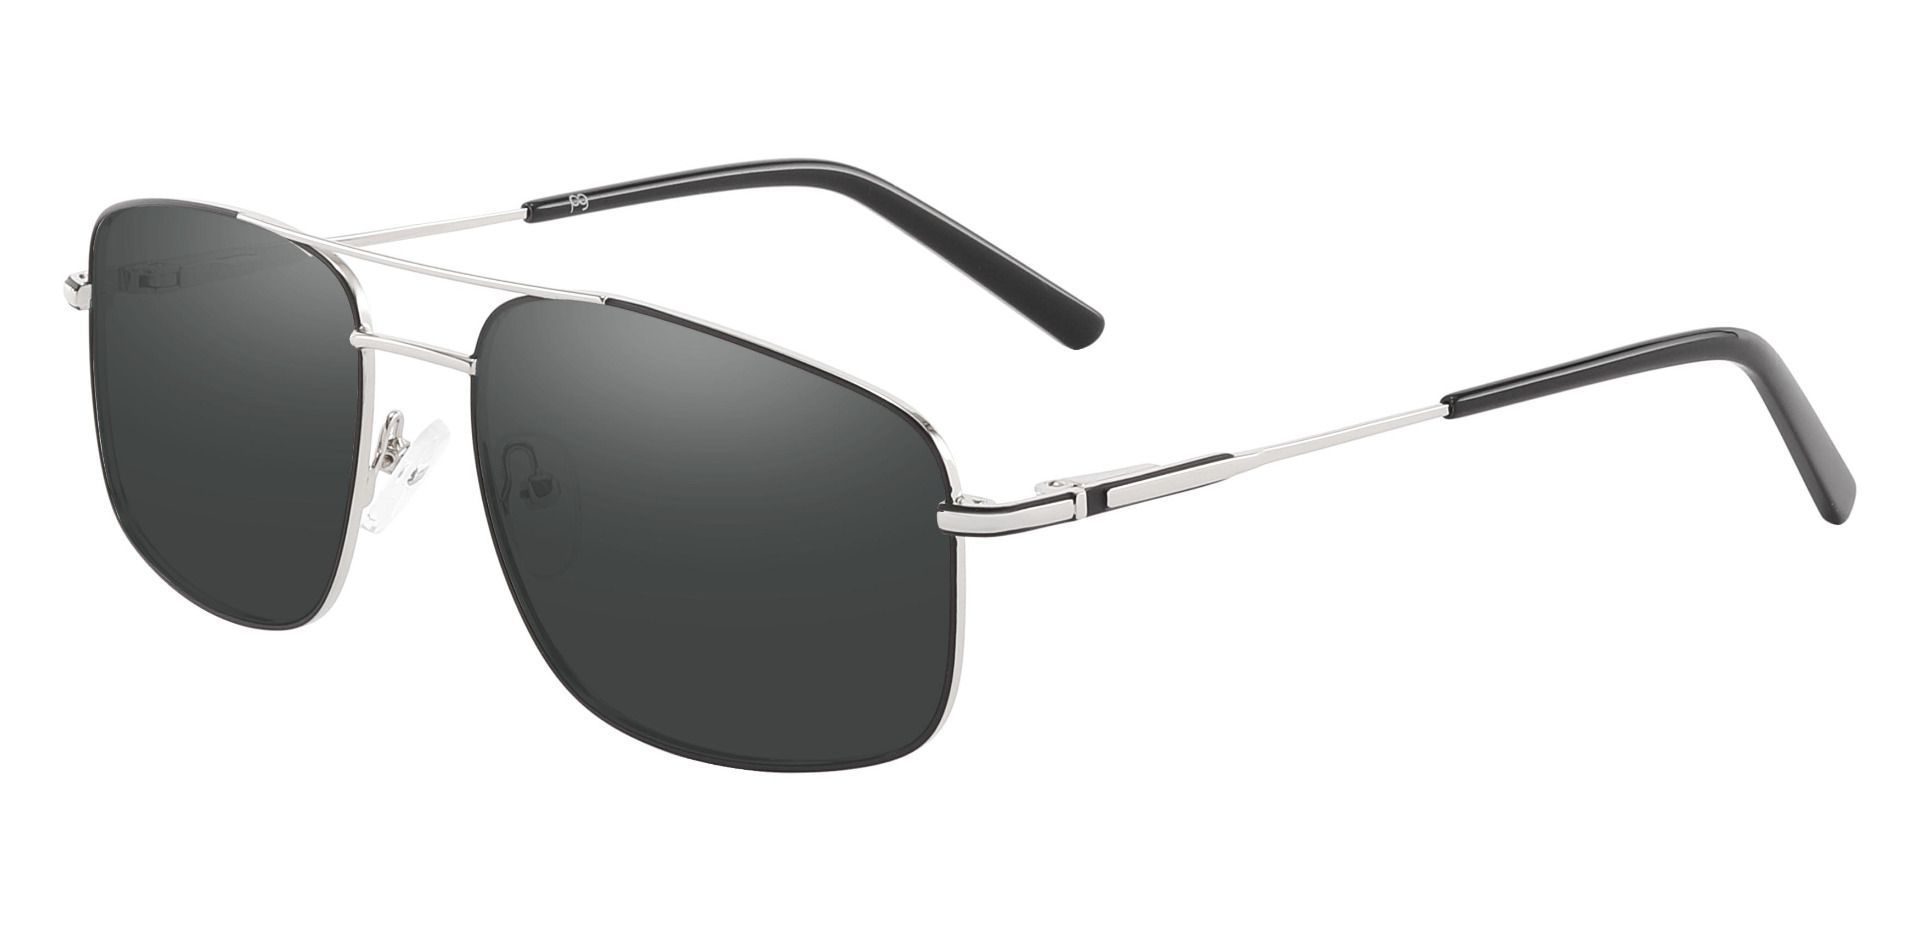 Turner Aviator Reading Sunglasses - Silver Frame With Gray Lenses